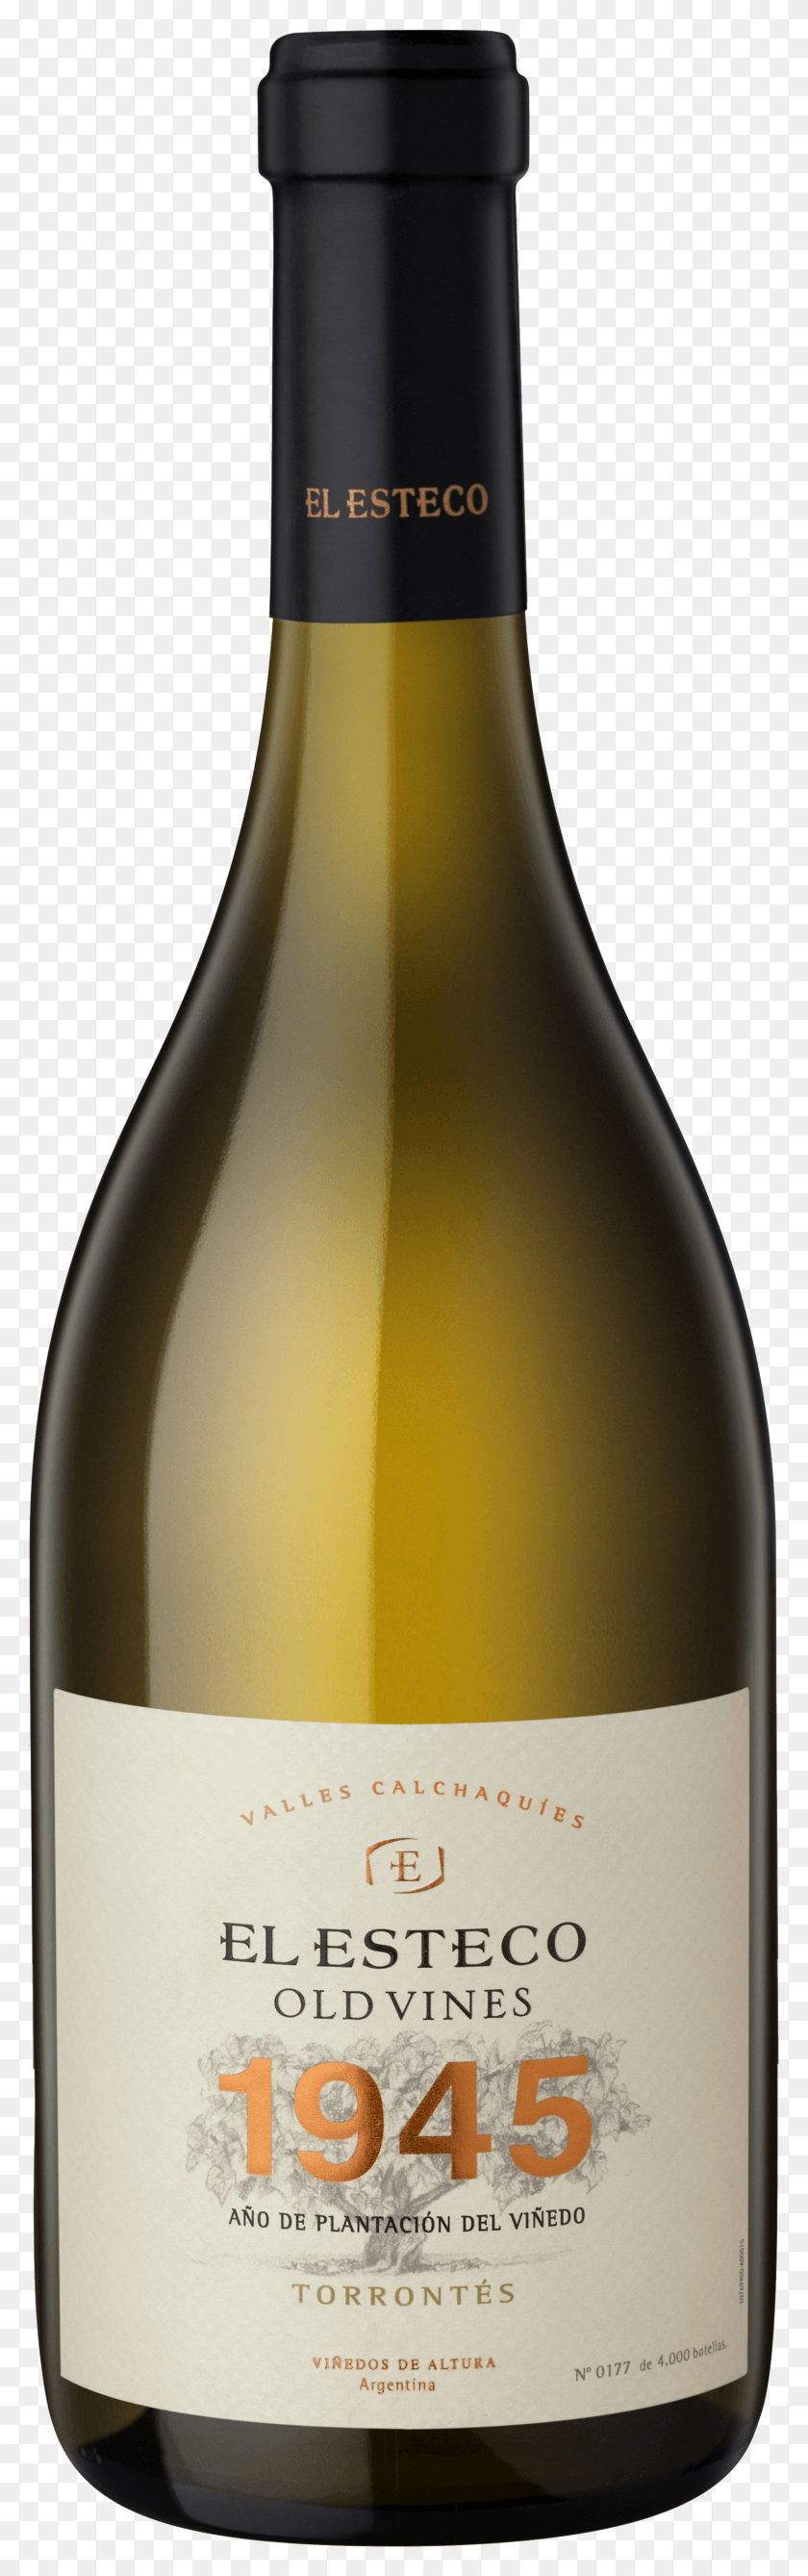 1633x5480 Png Стеклянная Бутылка El Esteco Old Vines Torrontes